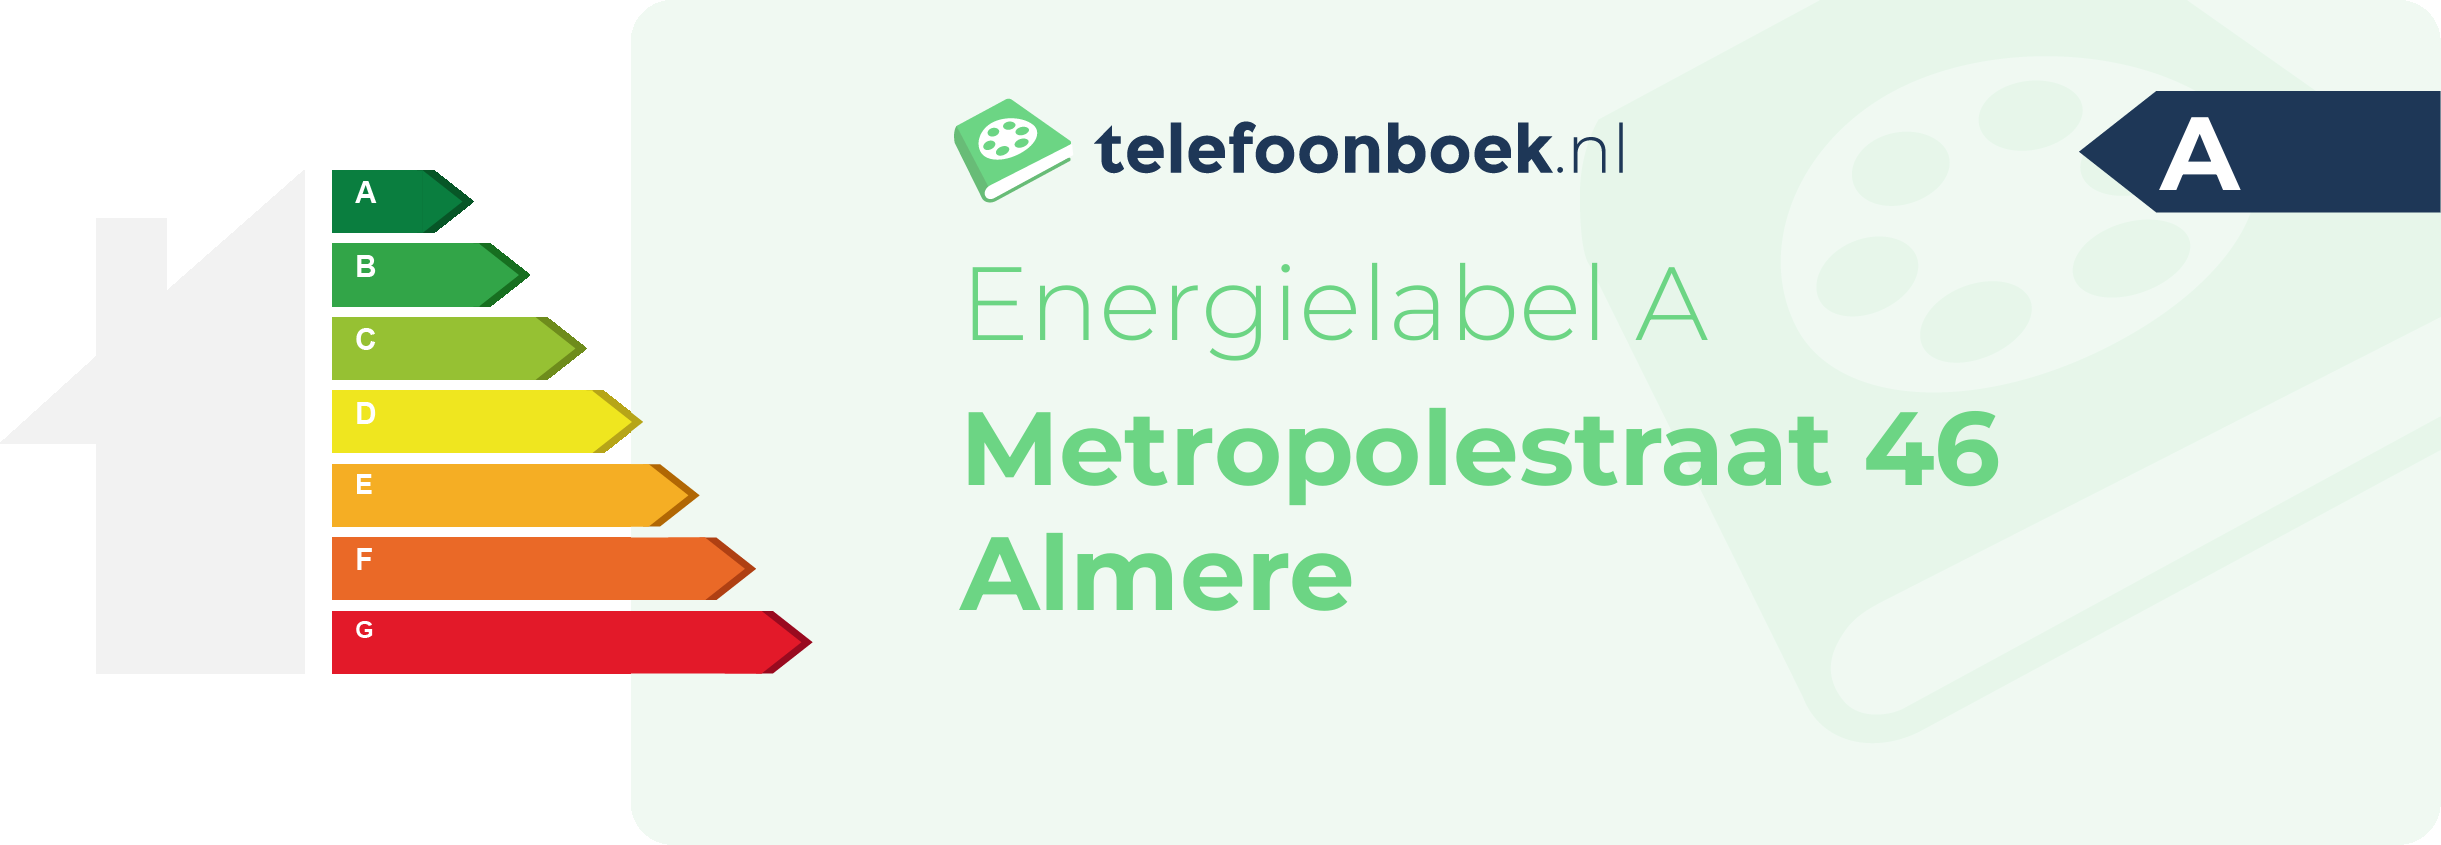 Energielabel Metropolestraat 46 Almere